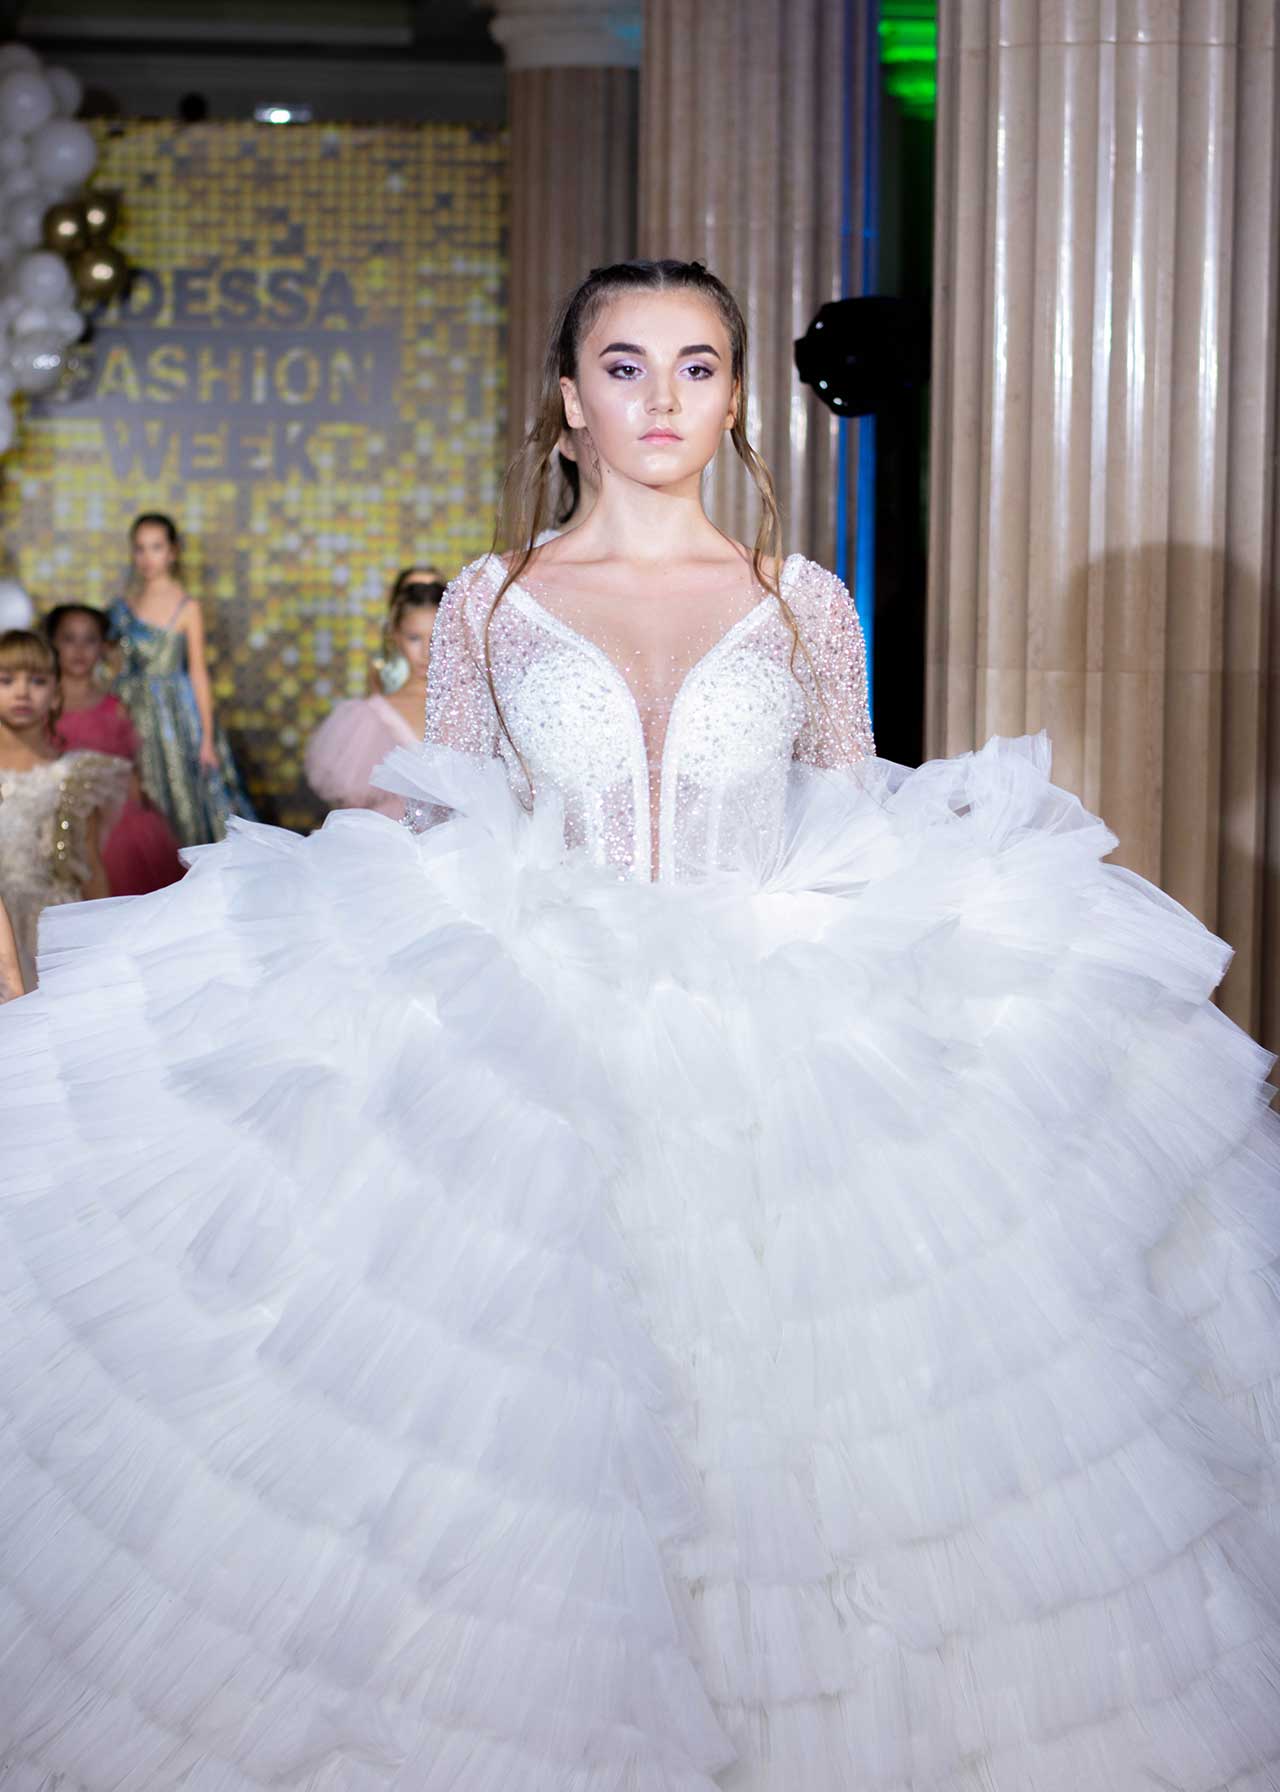 14 ноября состоялся Grand Opening 15th Anniversary Odessa Fashion Week в гостинице Bristol